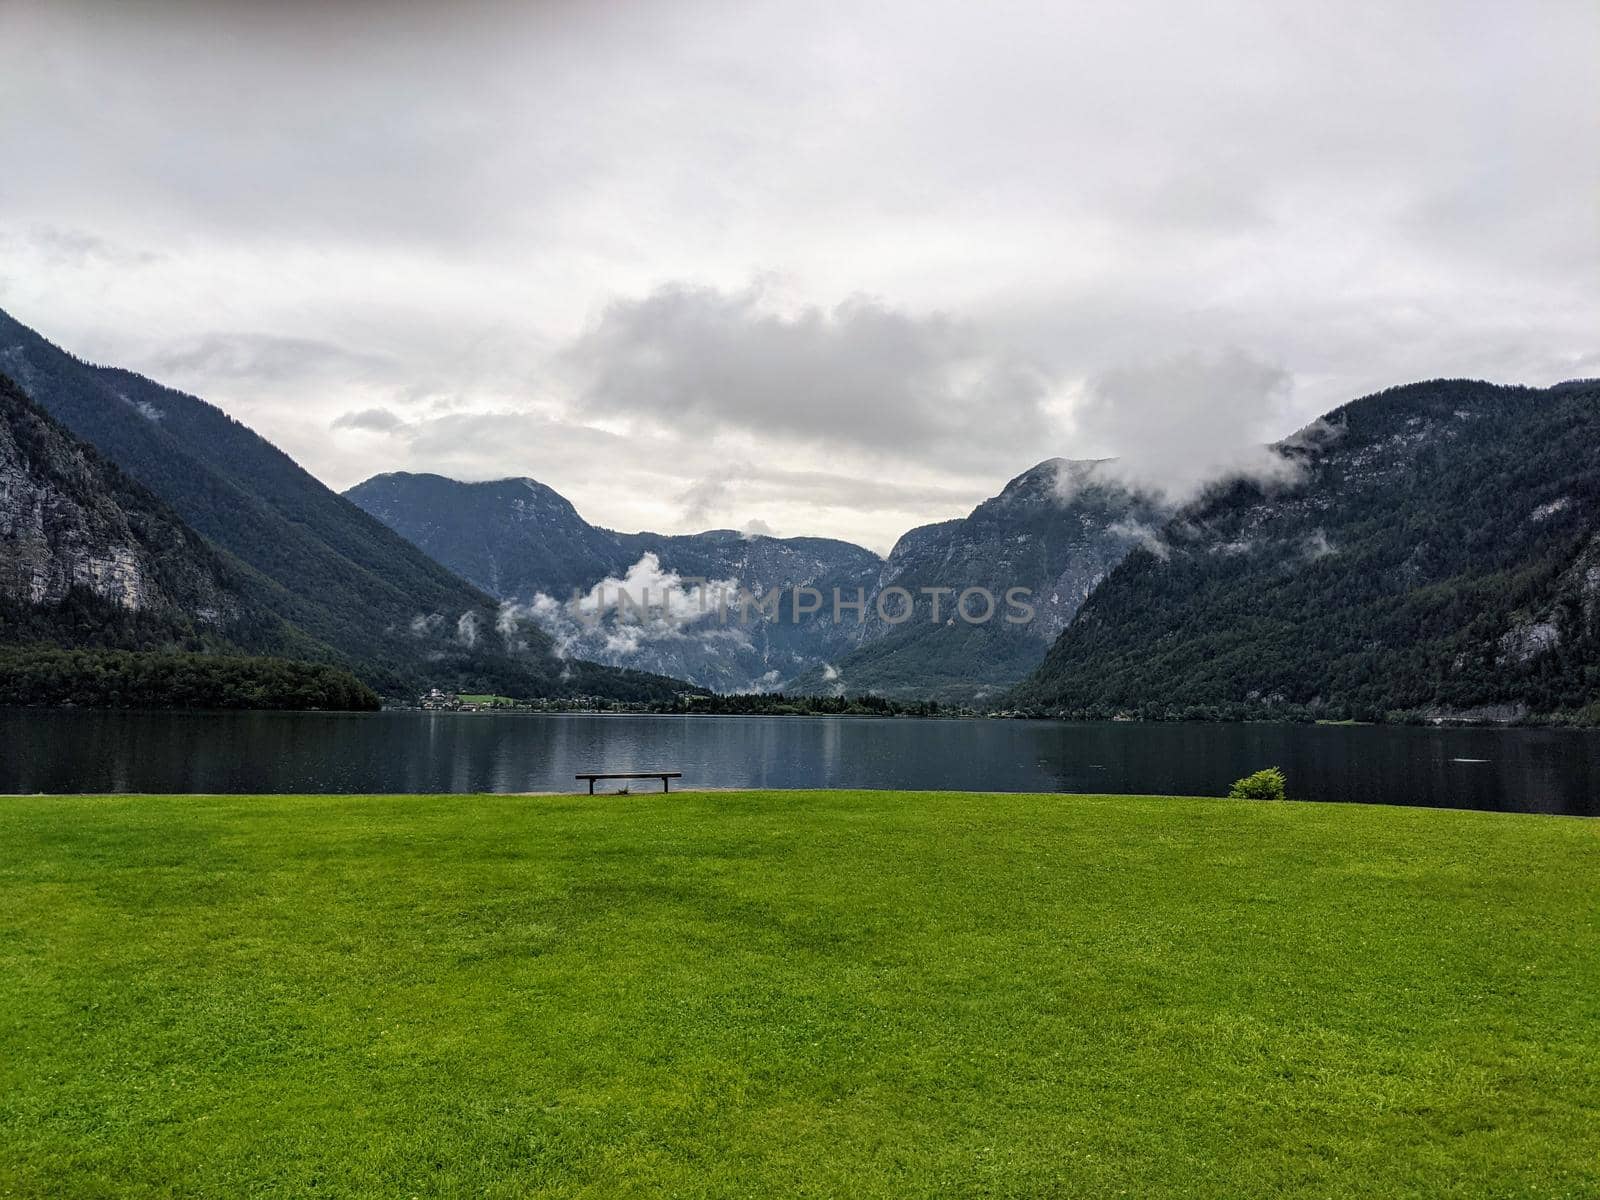 Alpine lake Hallstatter See during rain relaxing scenery by weruskak